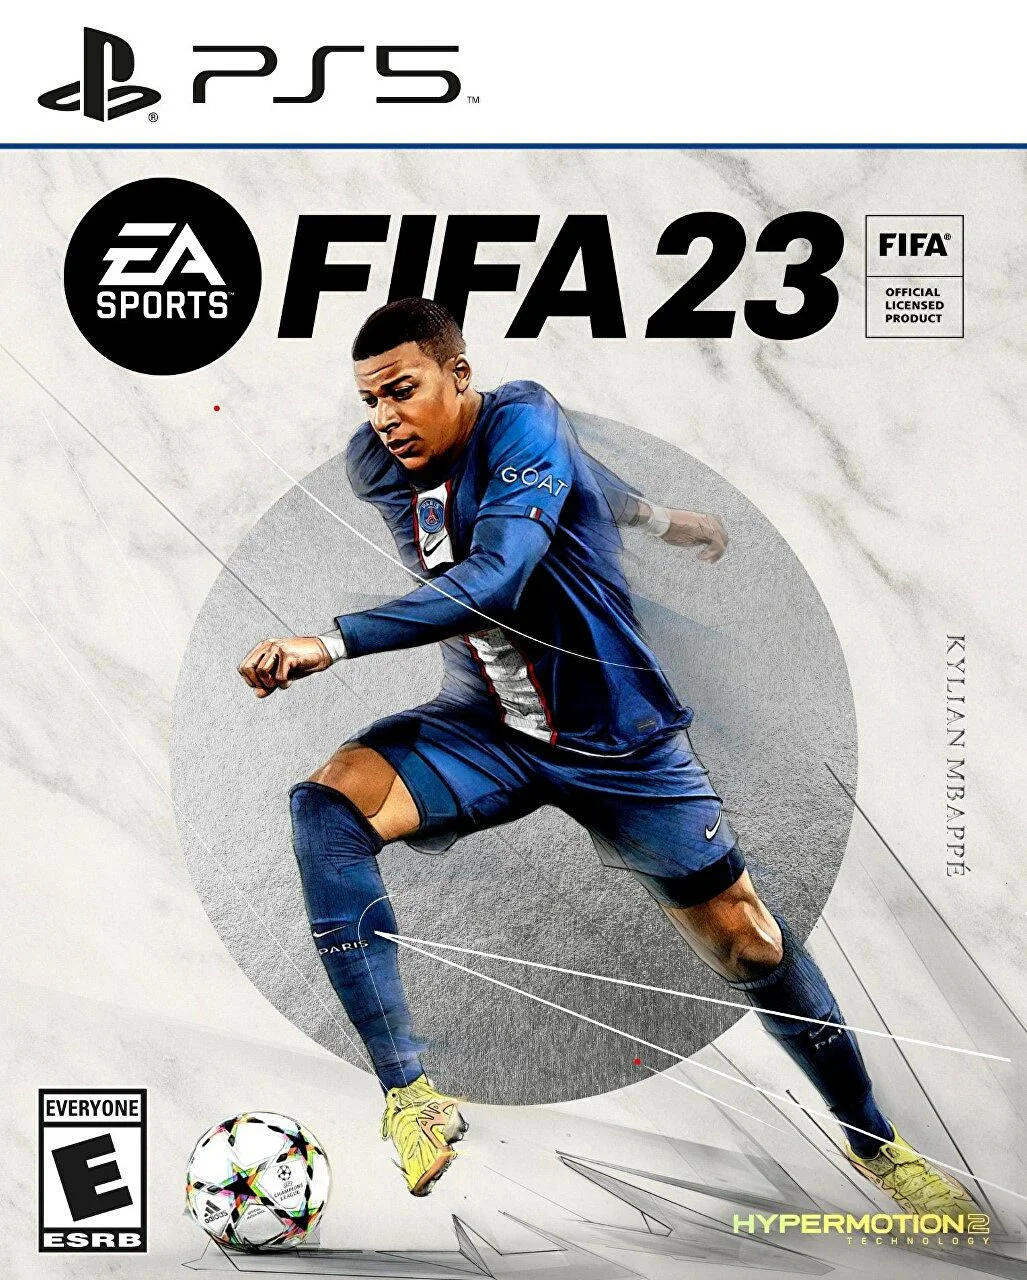 На обложке FIFA 23 появится футболистка Сэм Керр из Chelsea - фото 2